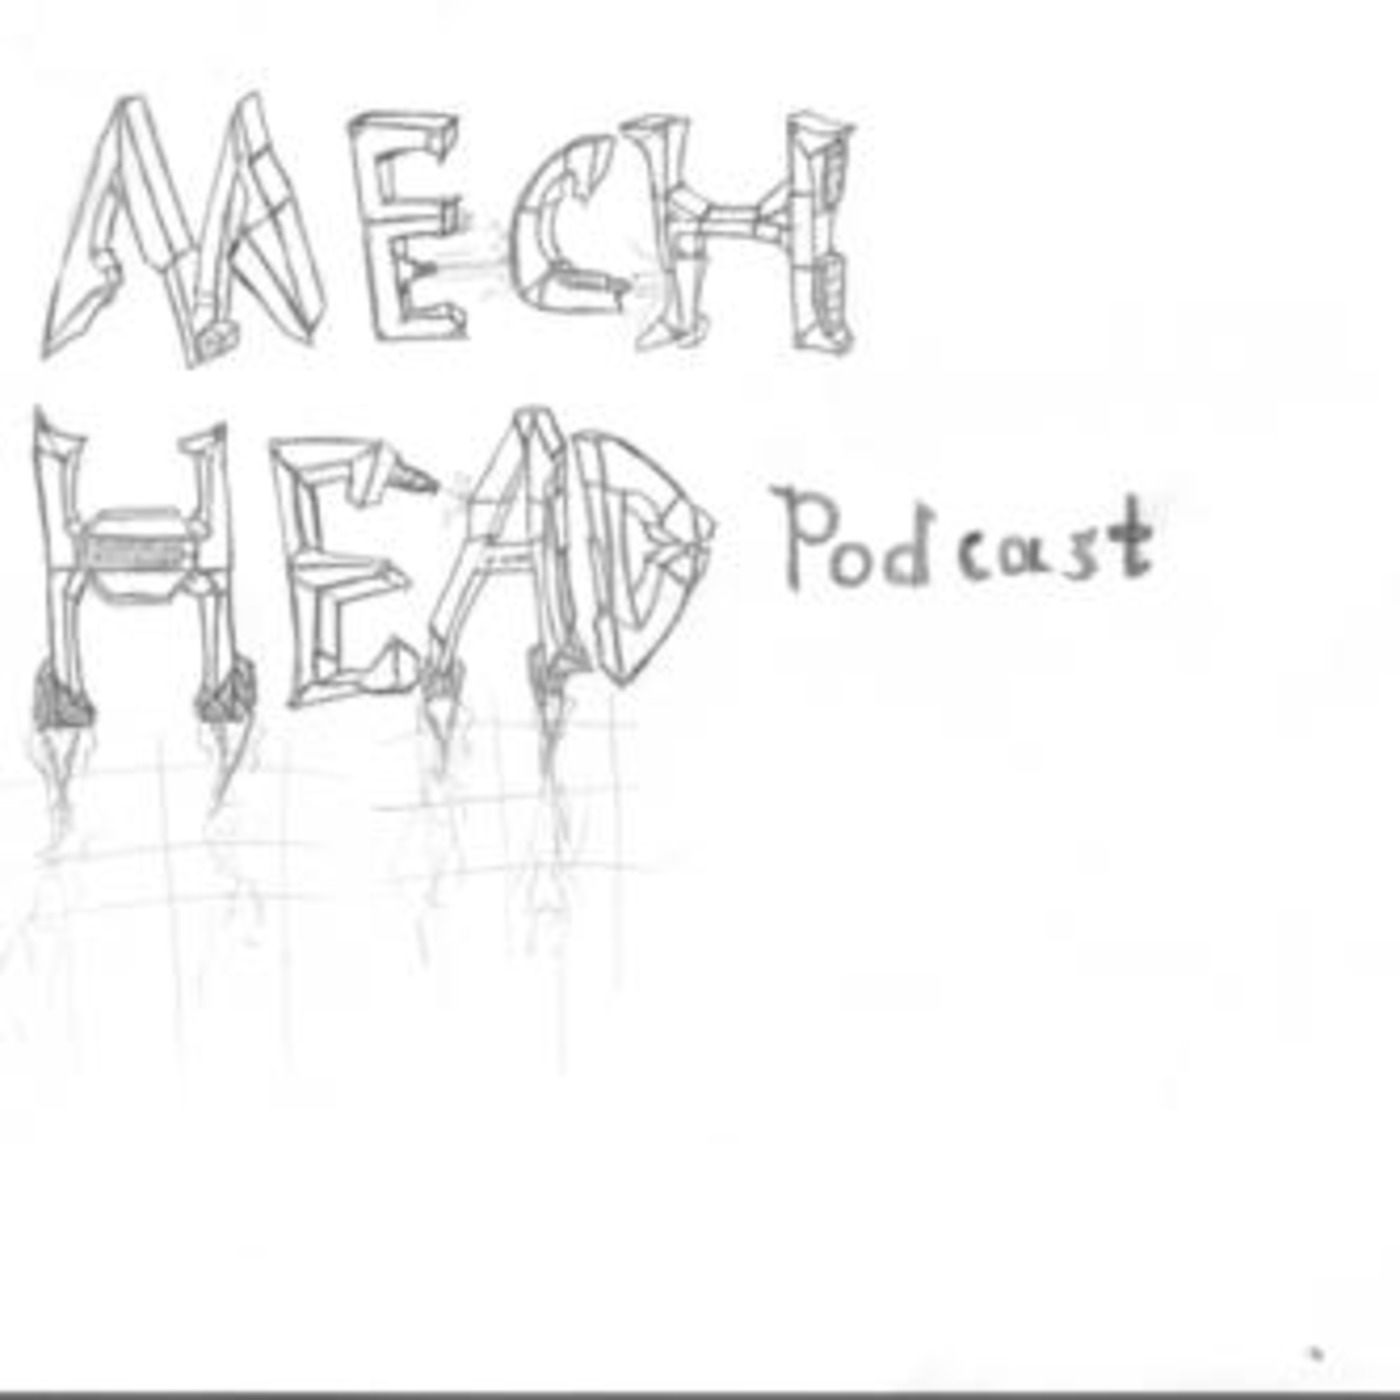 MechHead Podcast #37!